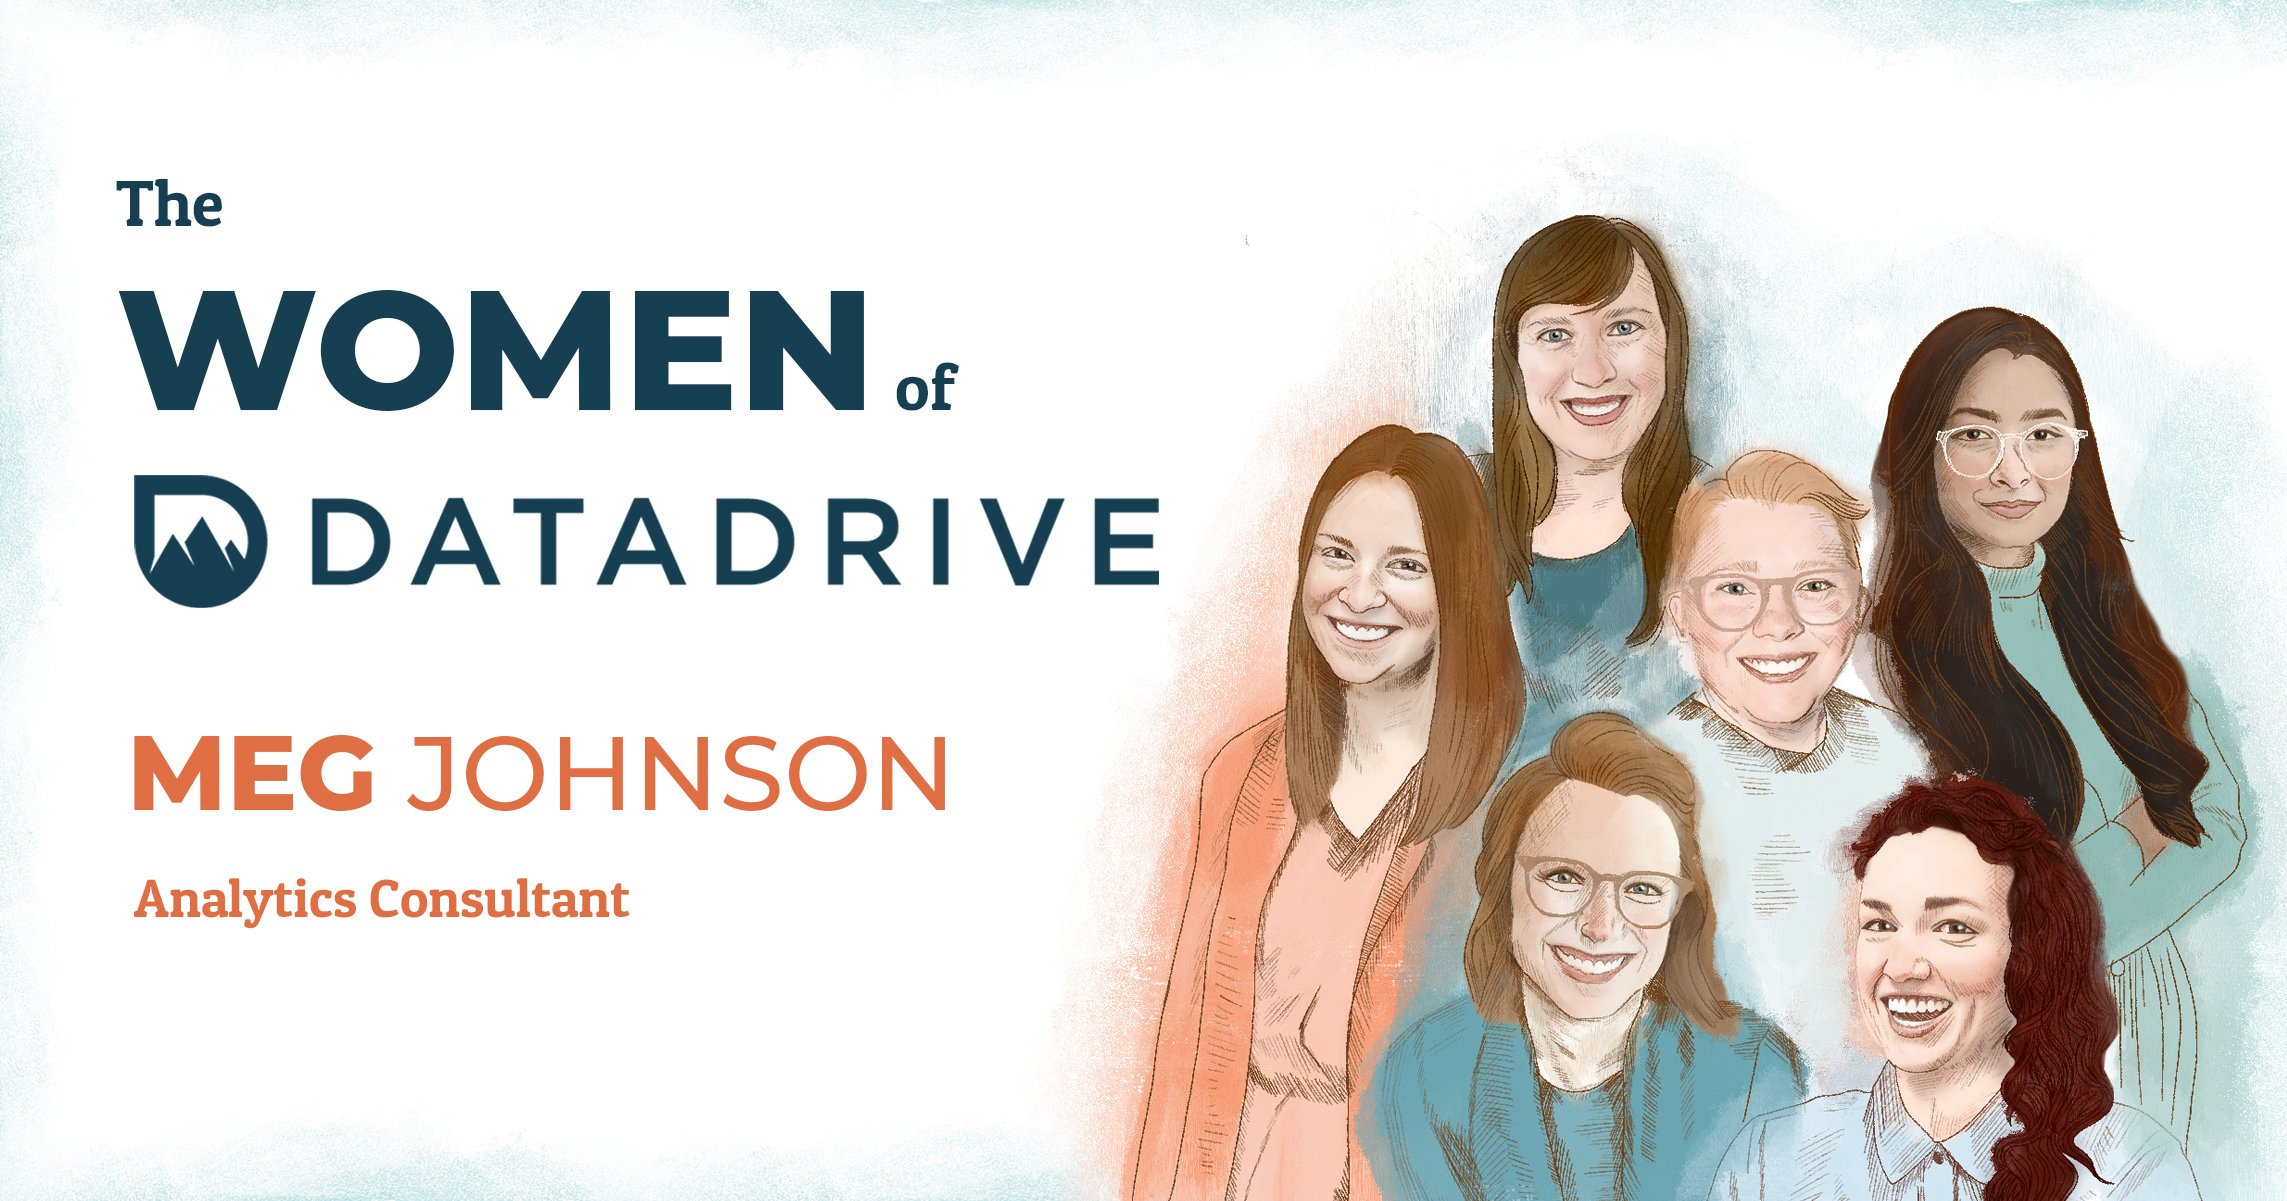 The Women of DataDrive - Meg Johnson